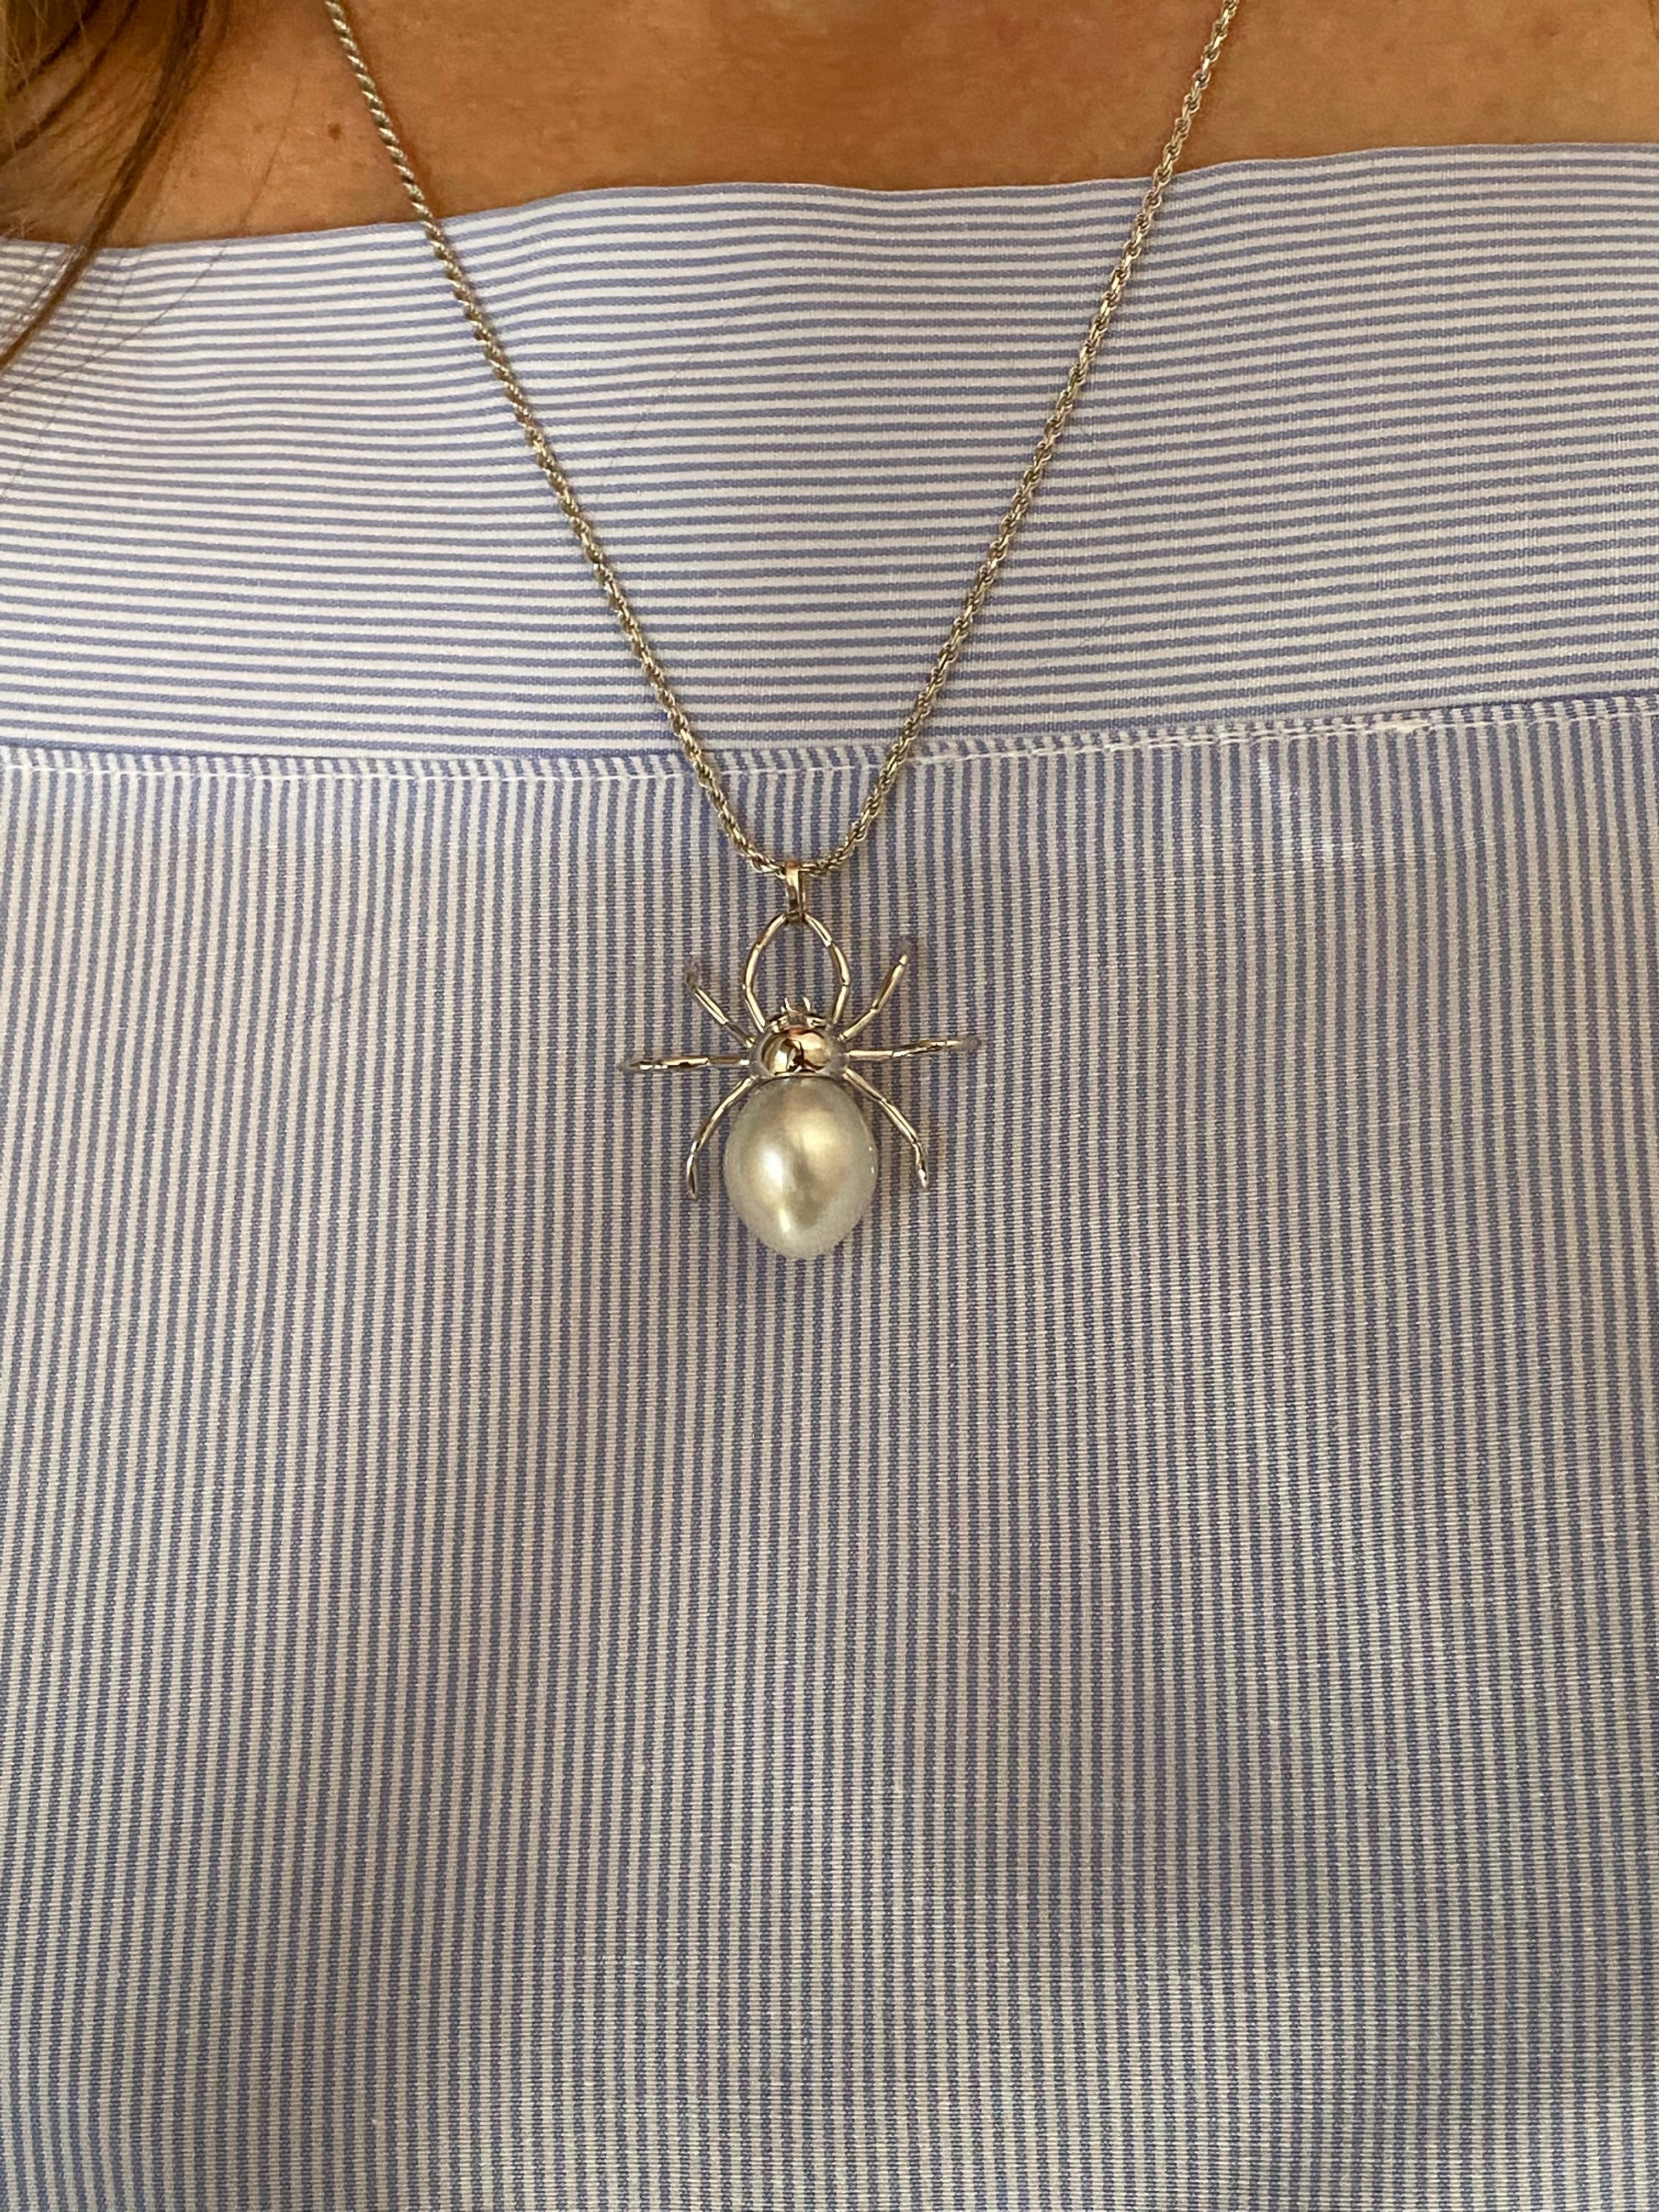 Women's Spider Black Diamond Australian Pearl White 18Kt Gold Pendant or Necklace For Sale